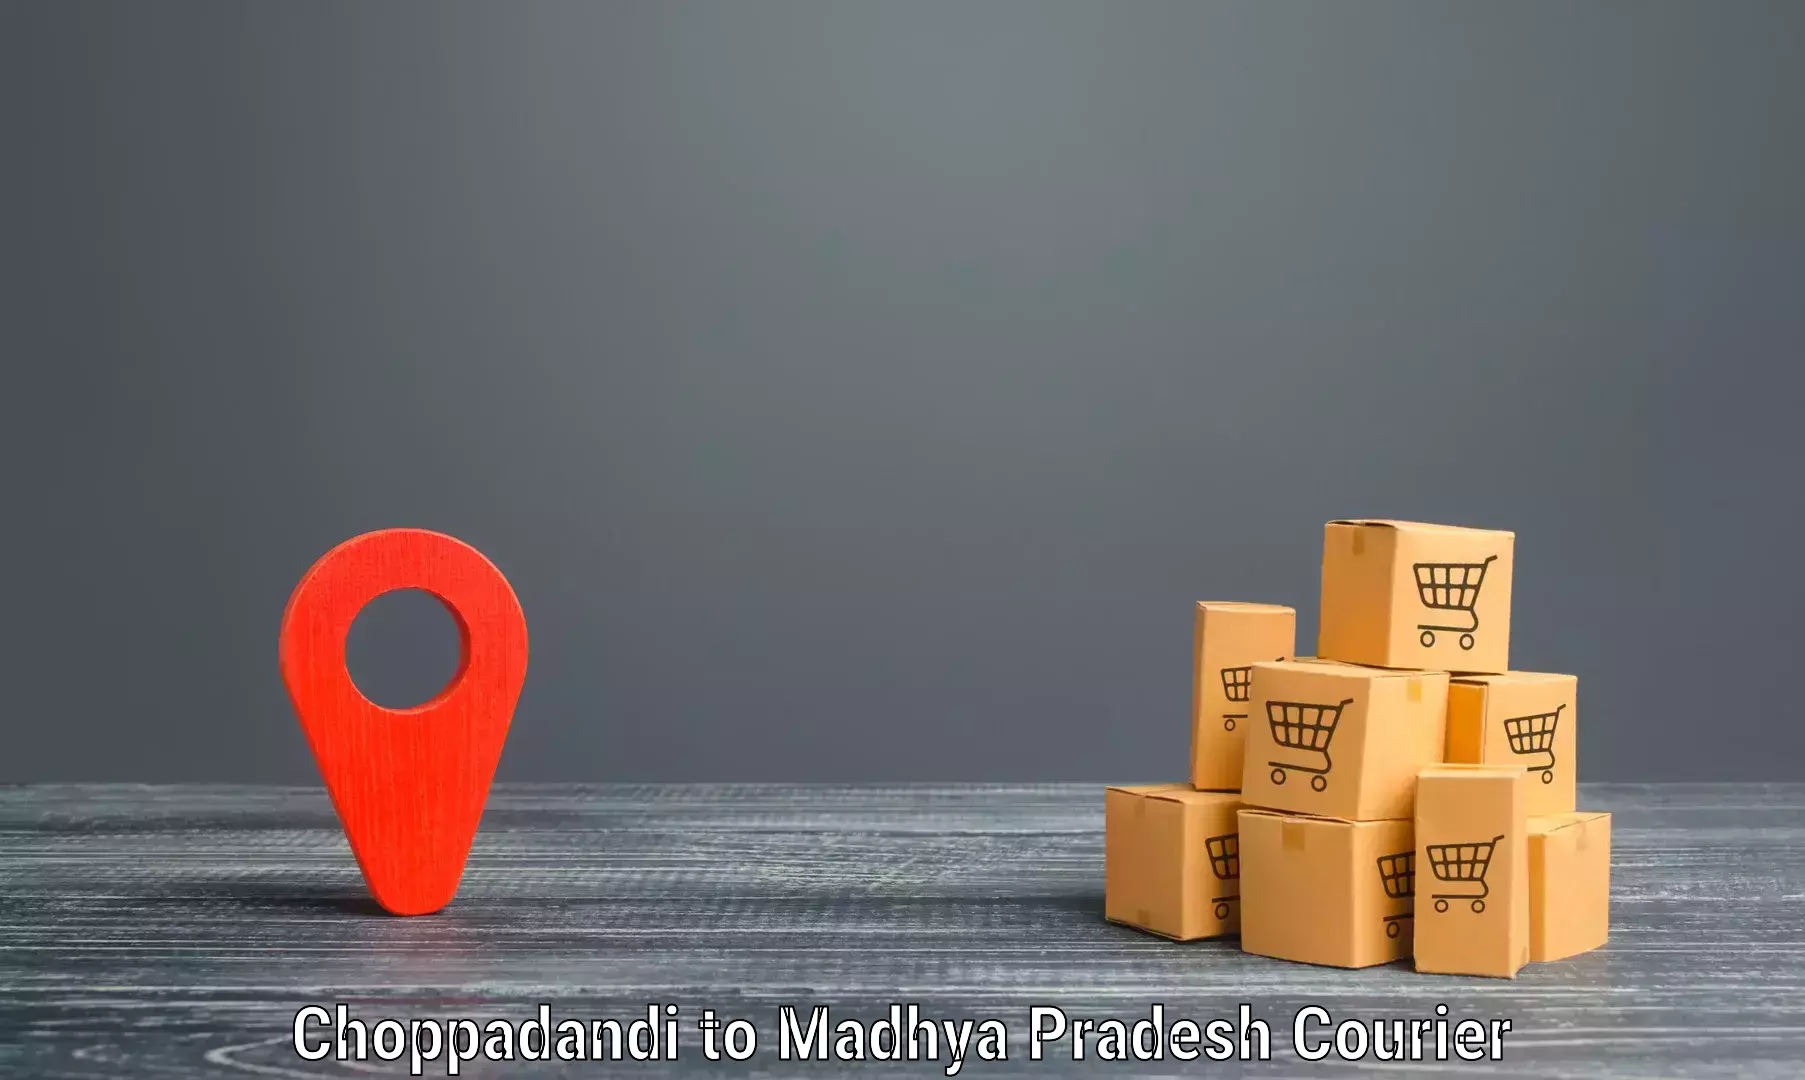 Courier service efficiency Choppadandi to Dewas